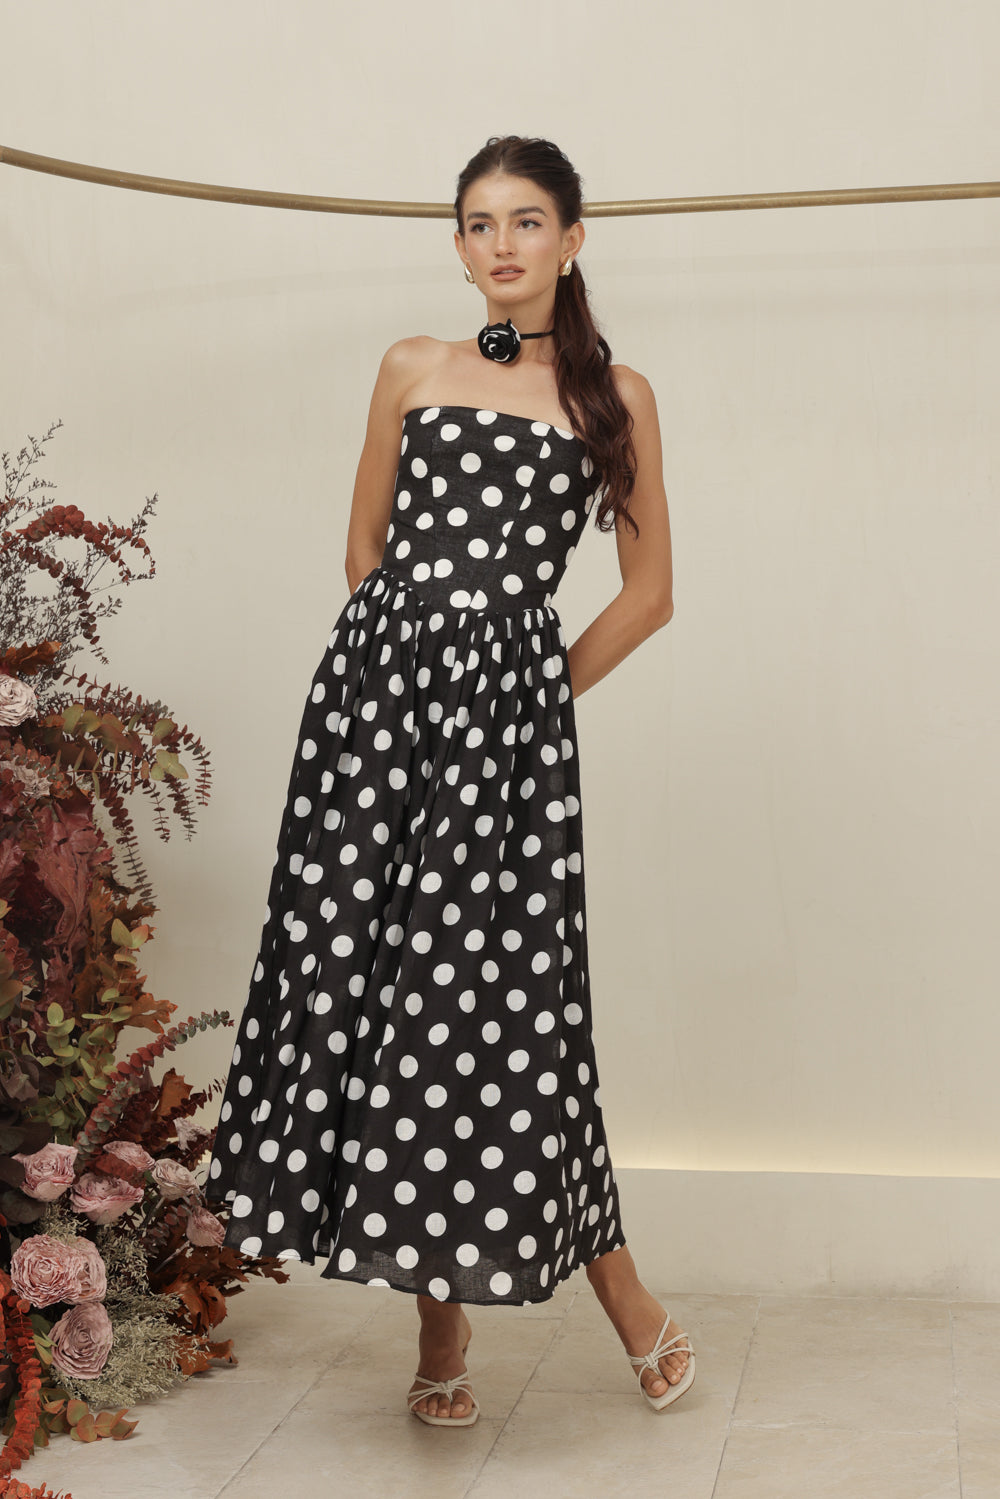 COCO DRESS Strapless Baroque Style Waist Midi Dress with Floral Neckpiece (Black Polkadot)